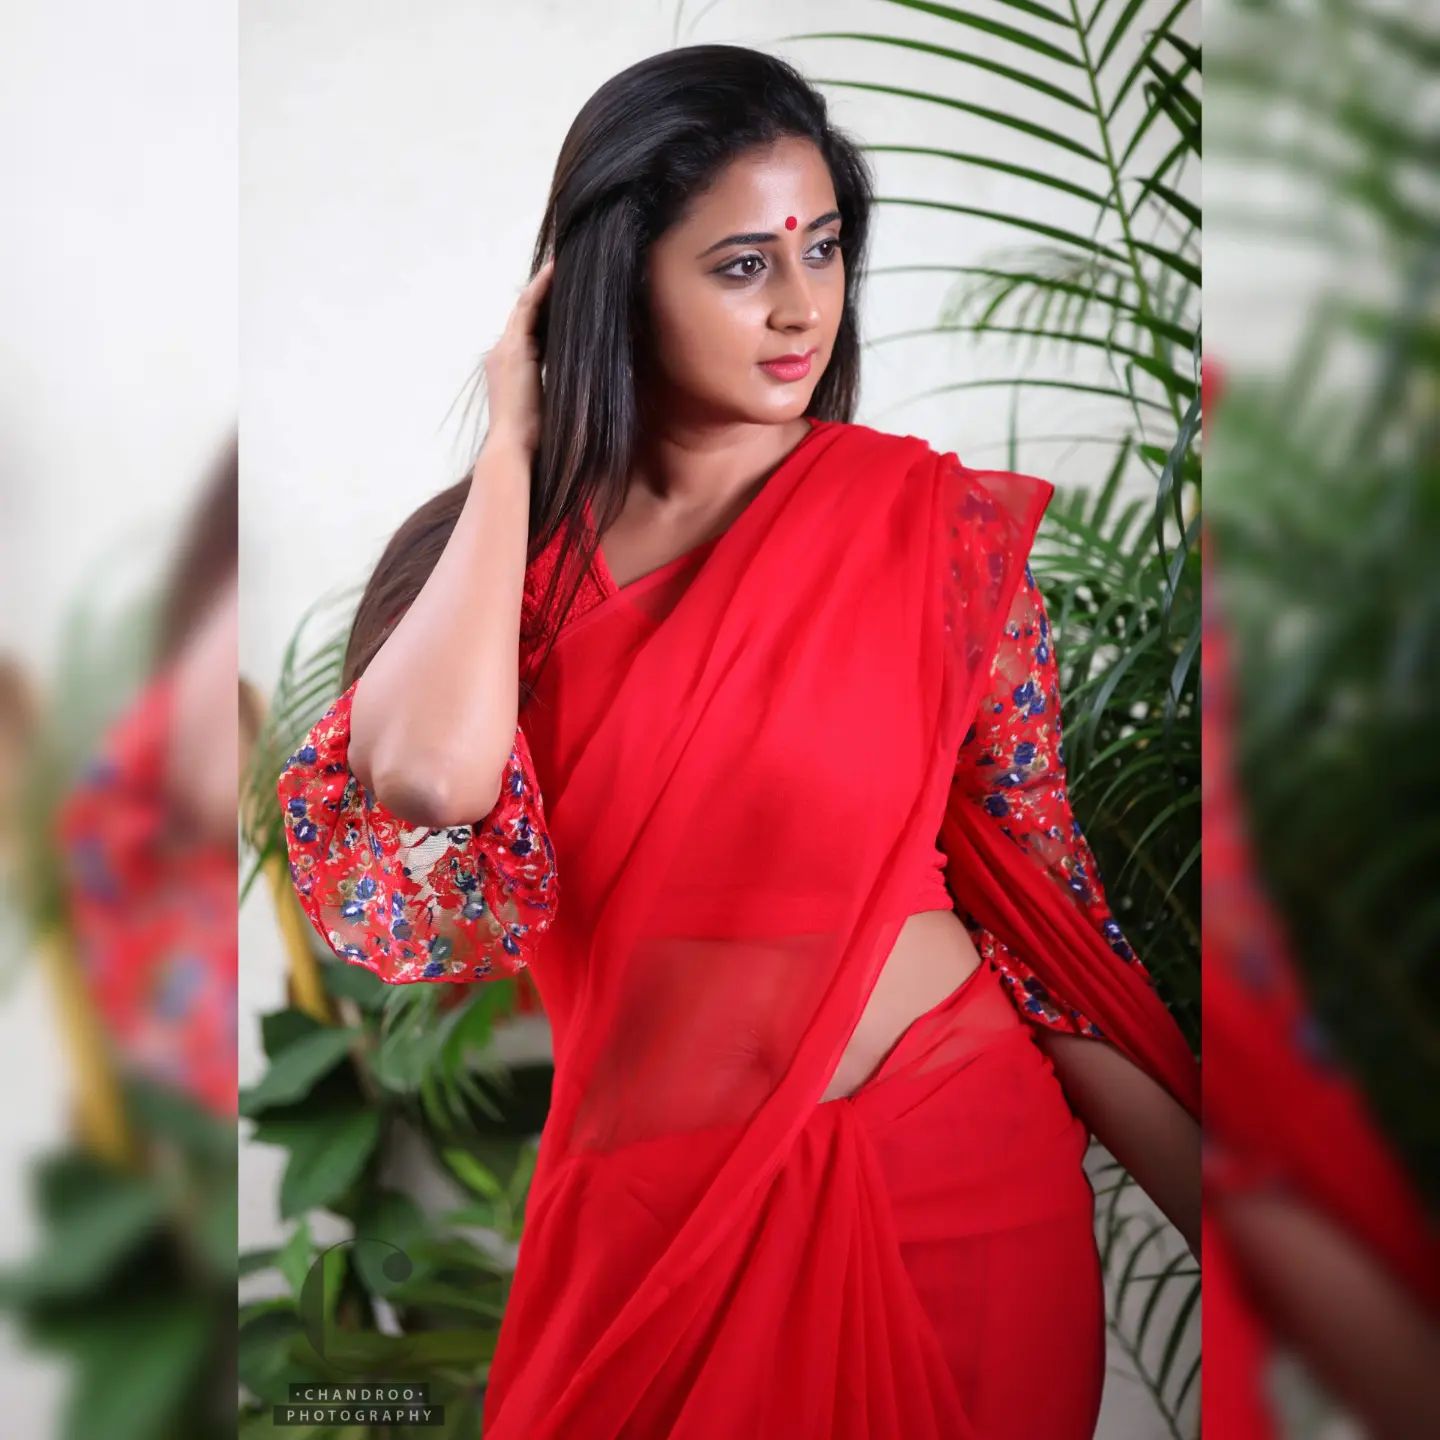 Kaniha posing in red hot saree photos on social media